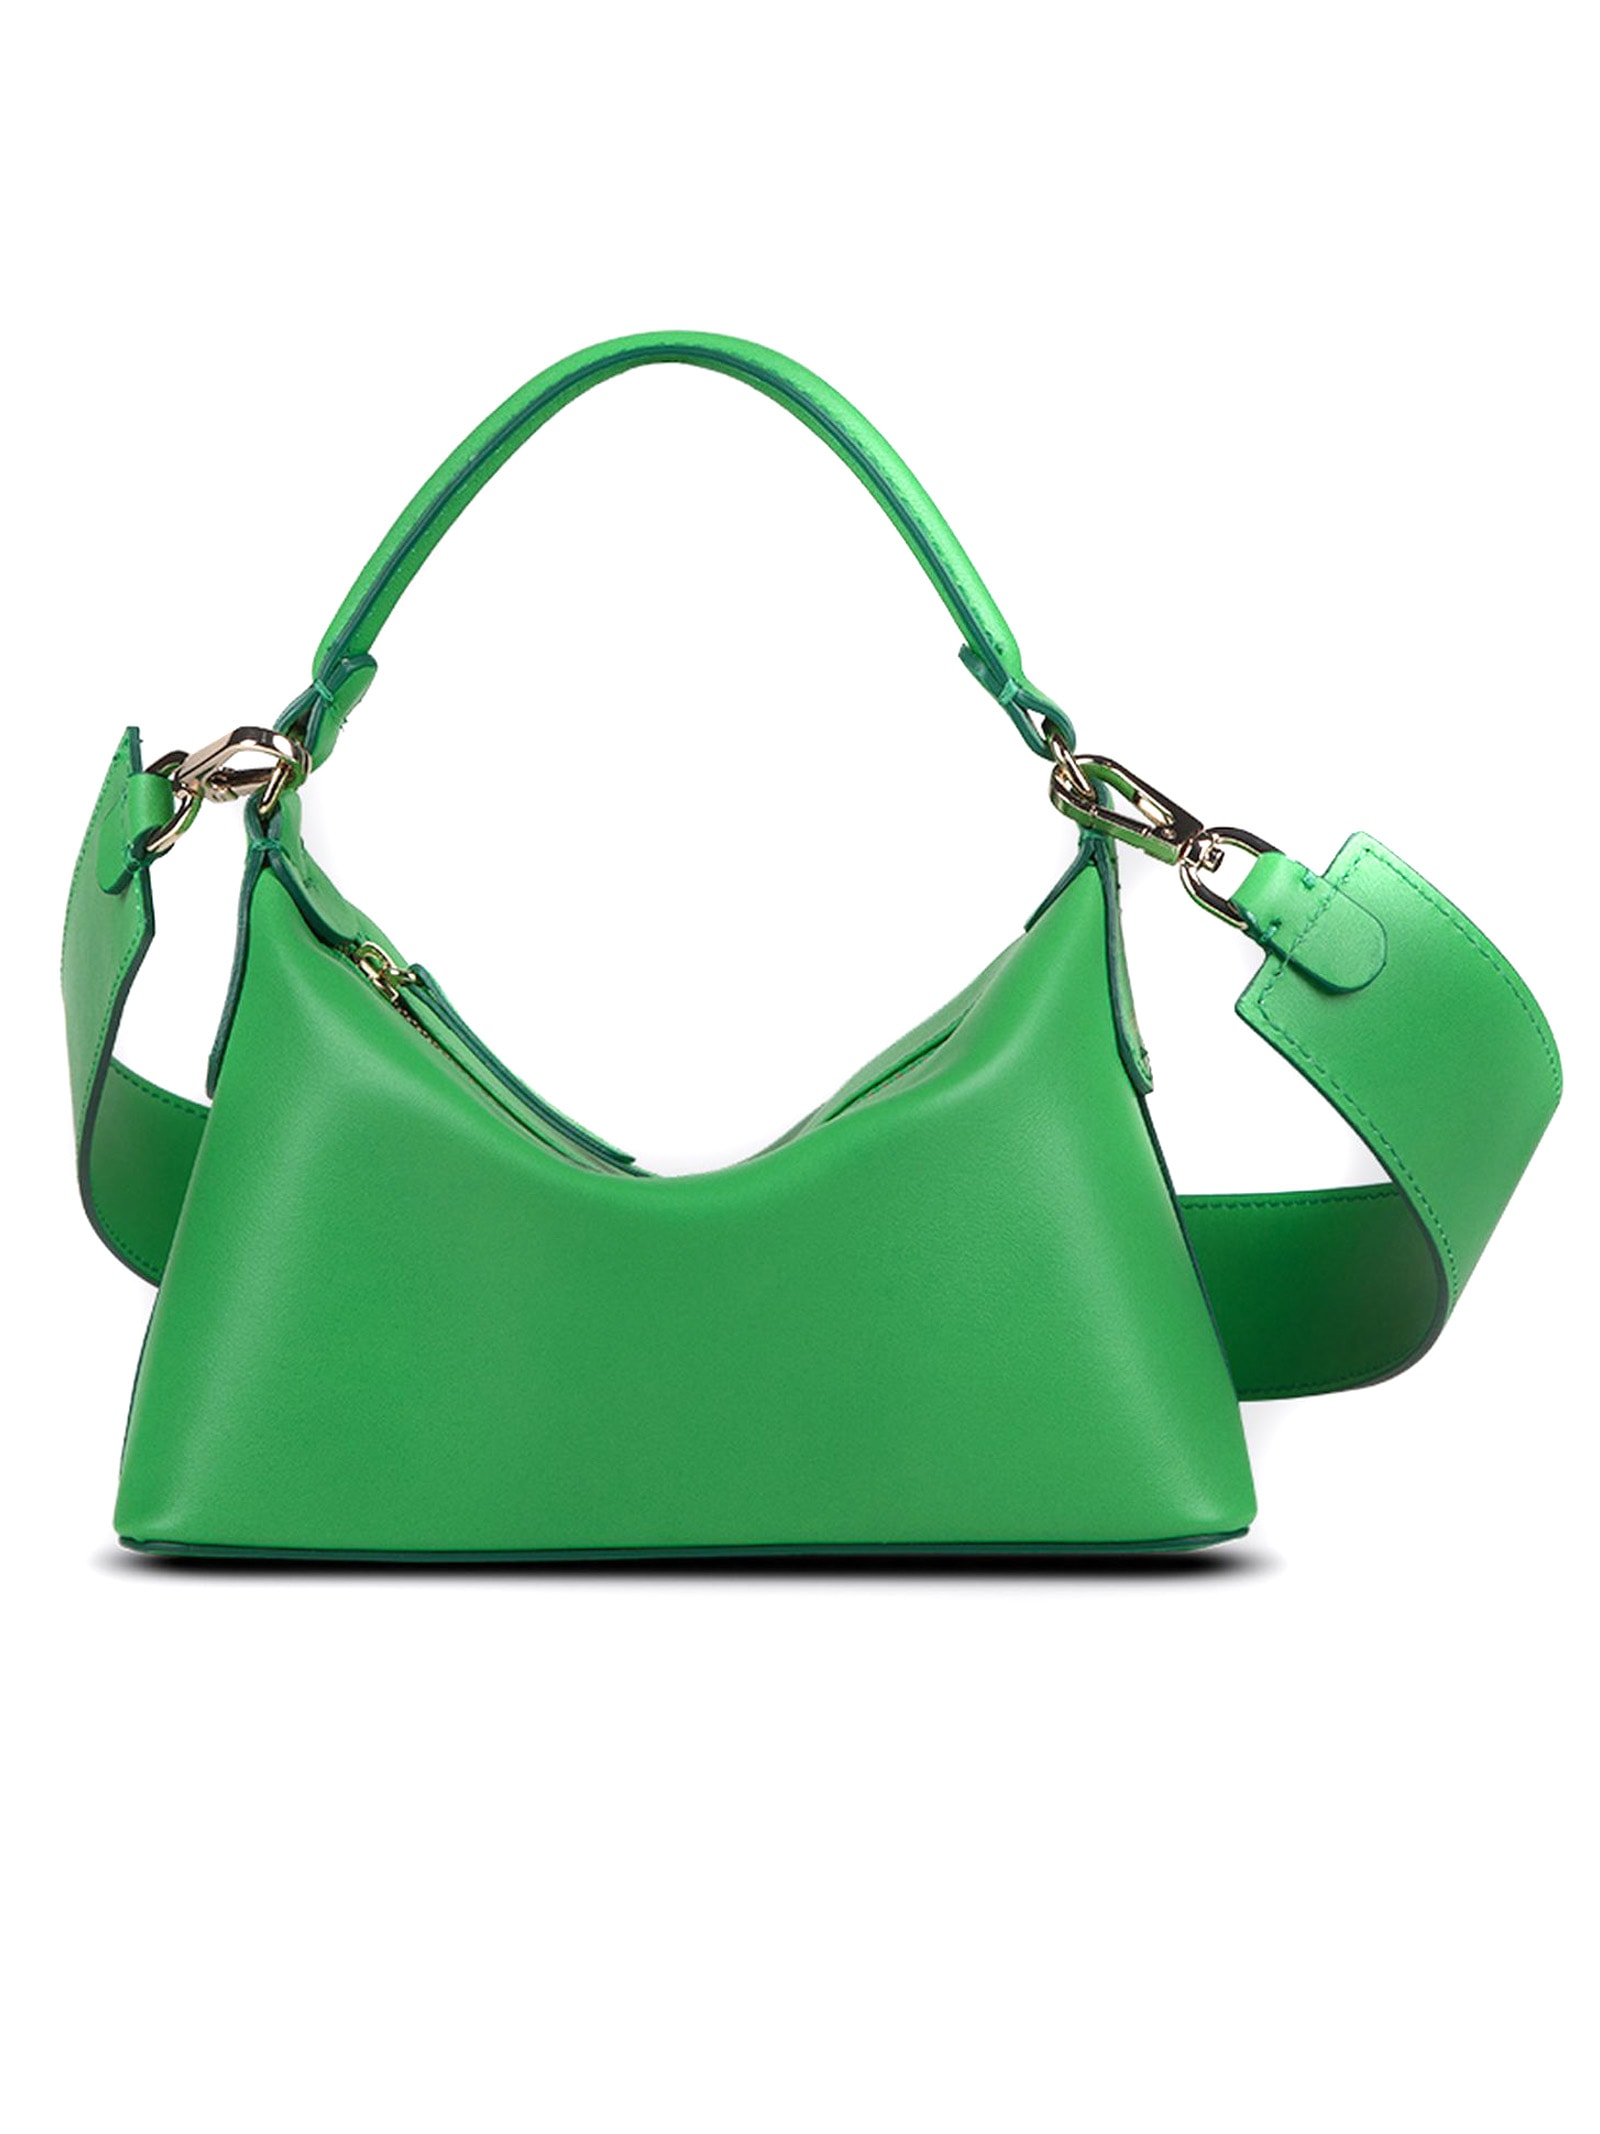 Leonie Hanne Mini Hobo Bag In Green Leather In Verde